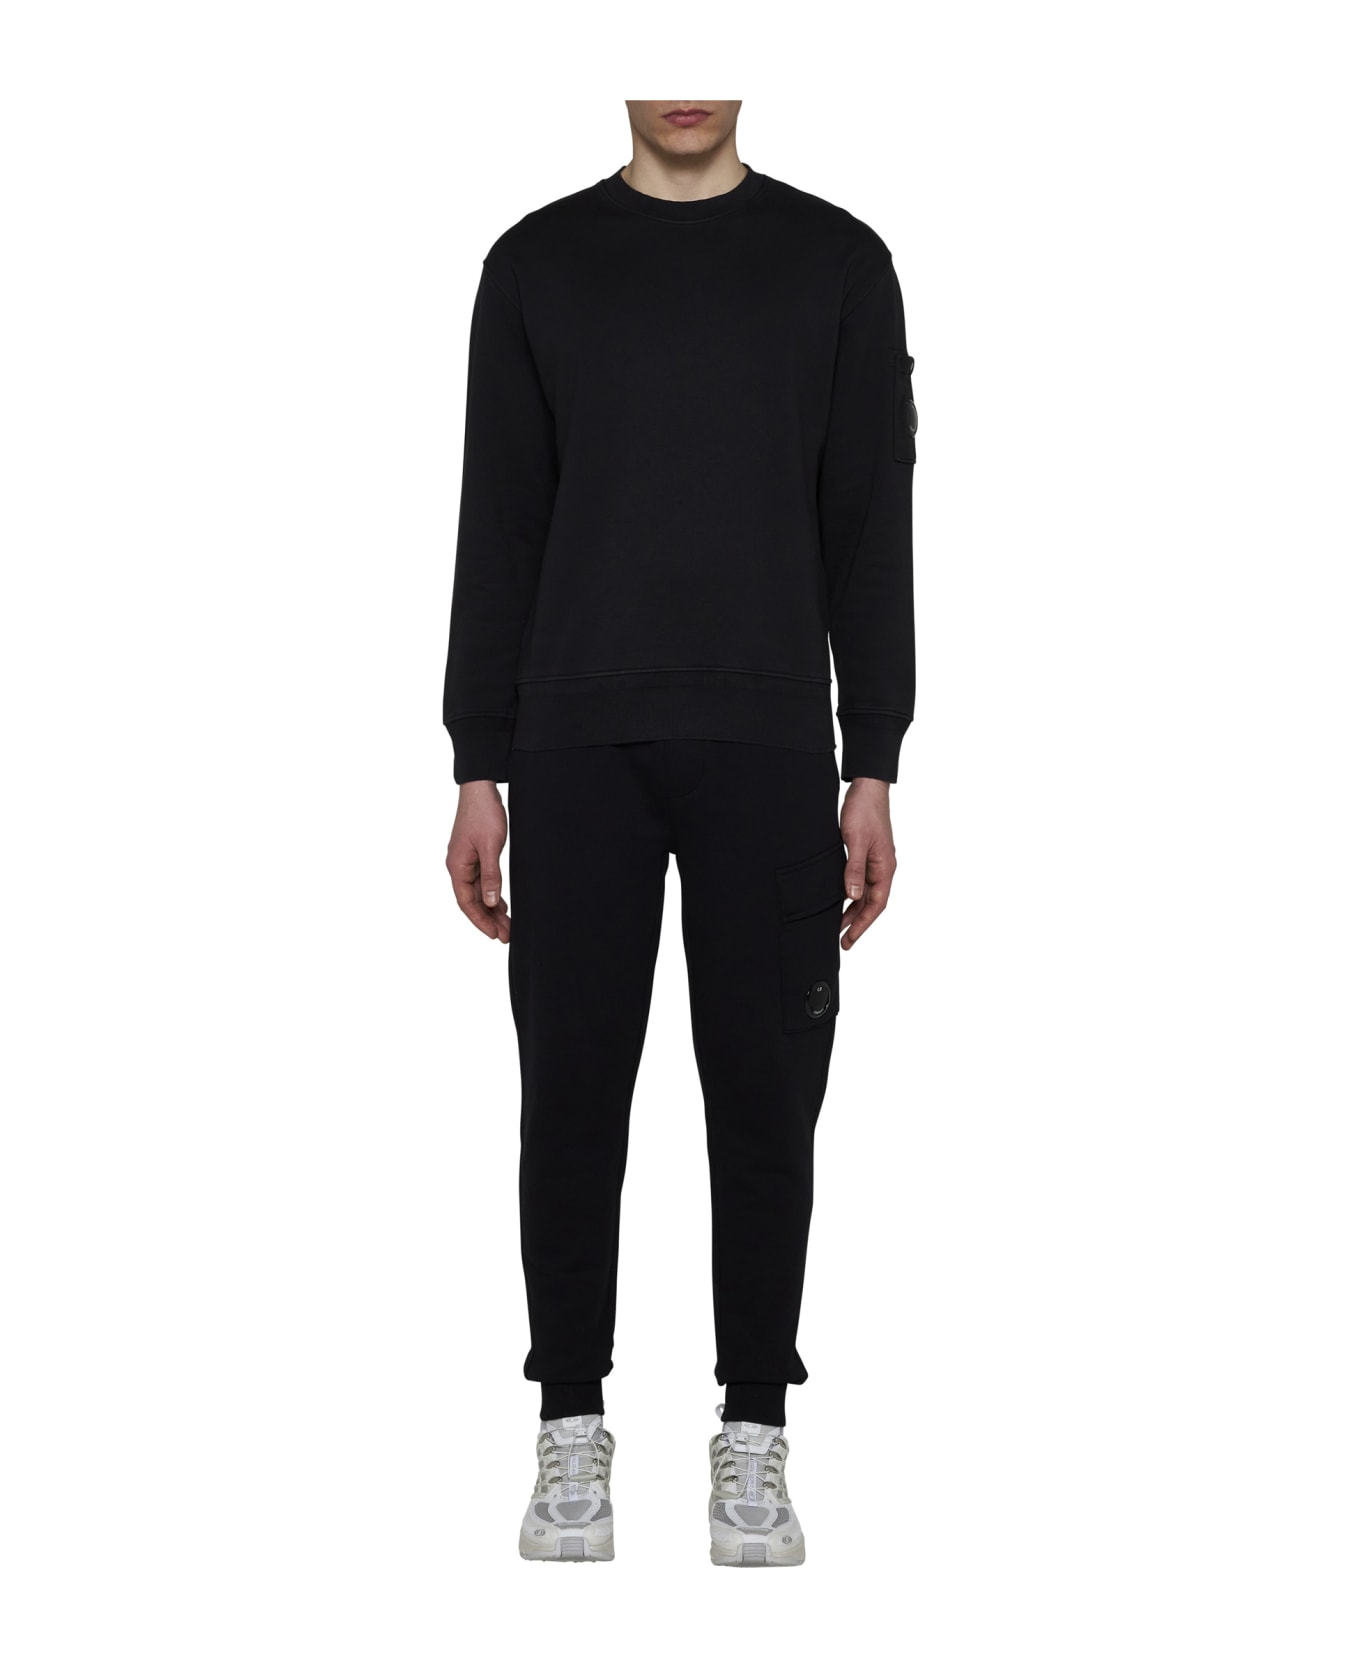 C.P. Company Black Cotton Sweatshirt - Black フリース